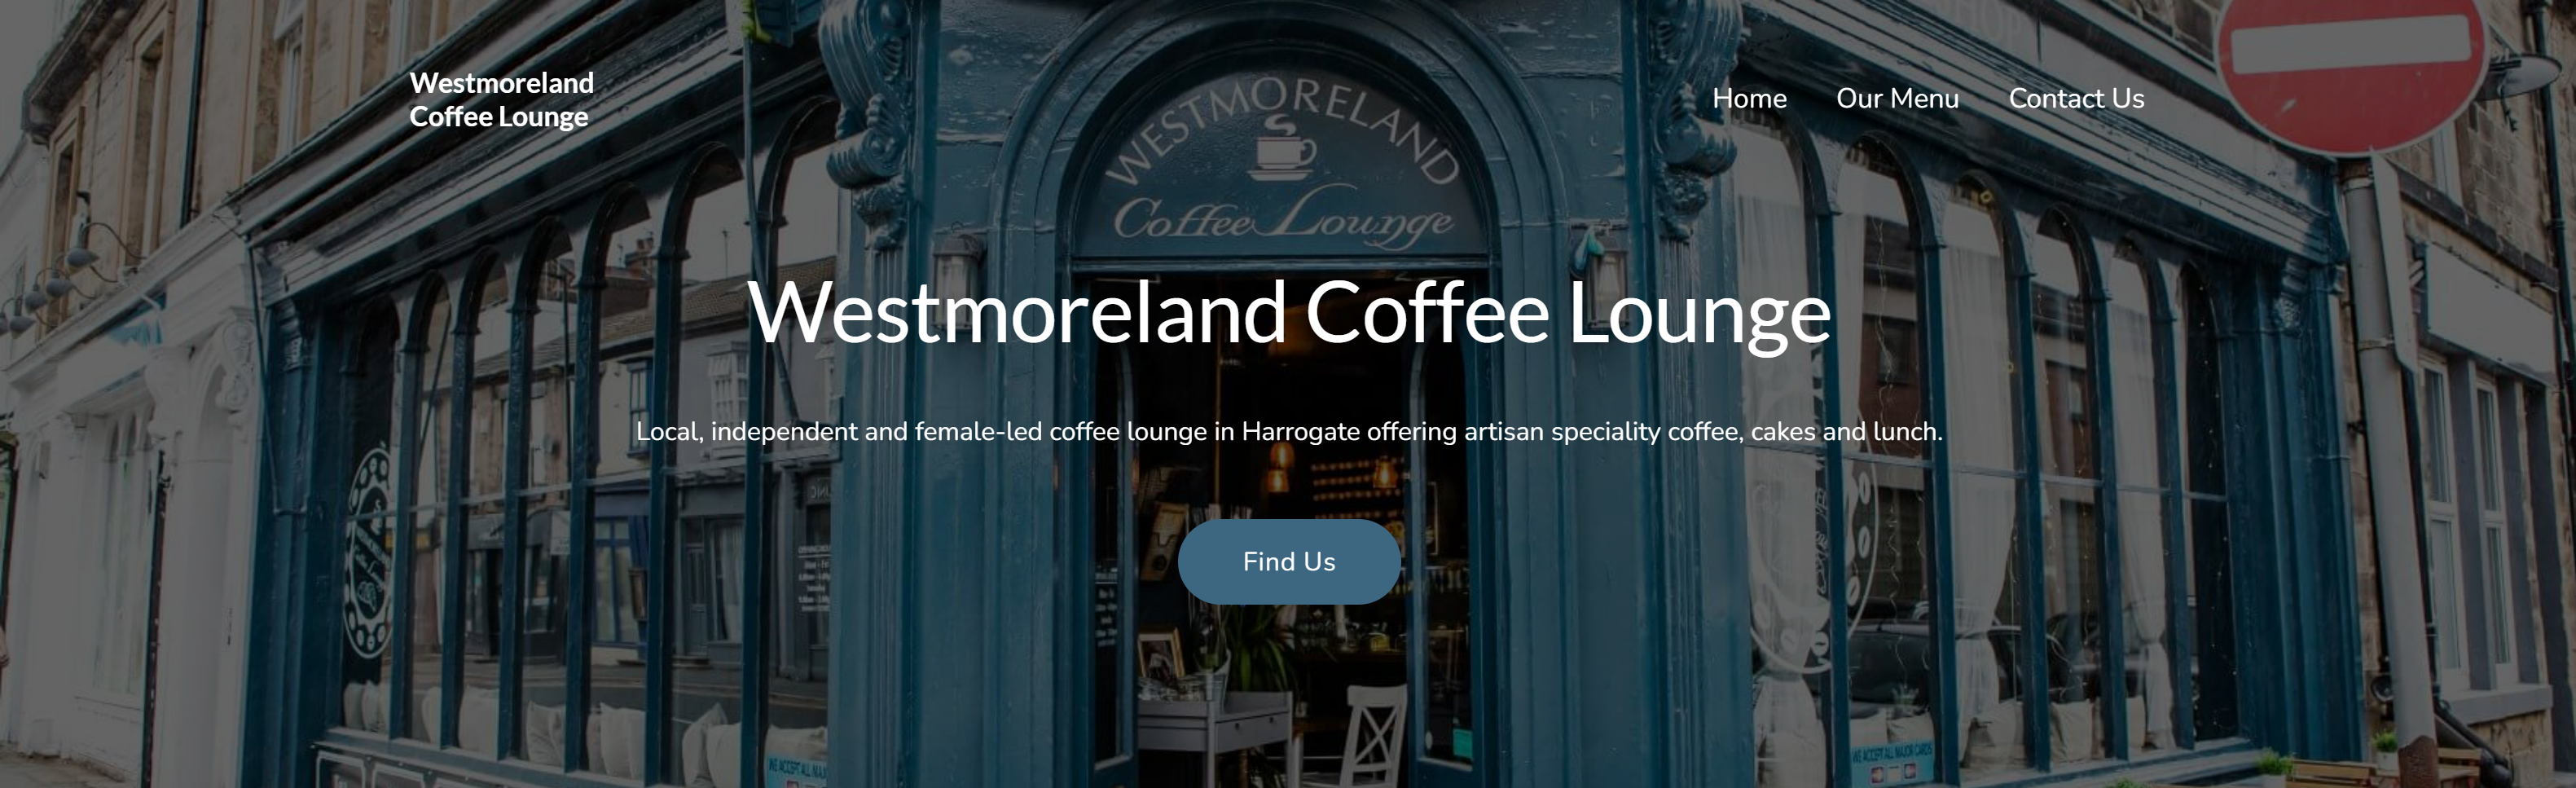 Westmoreland Coffee Lounge